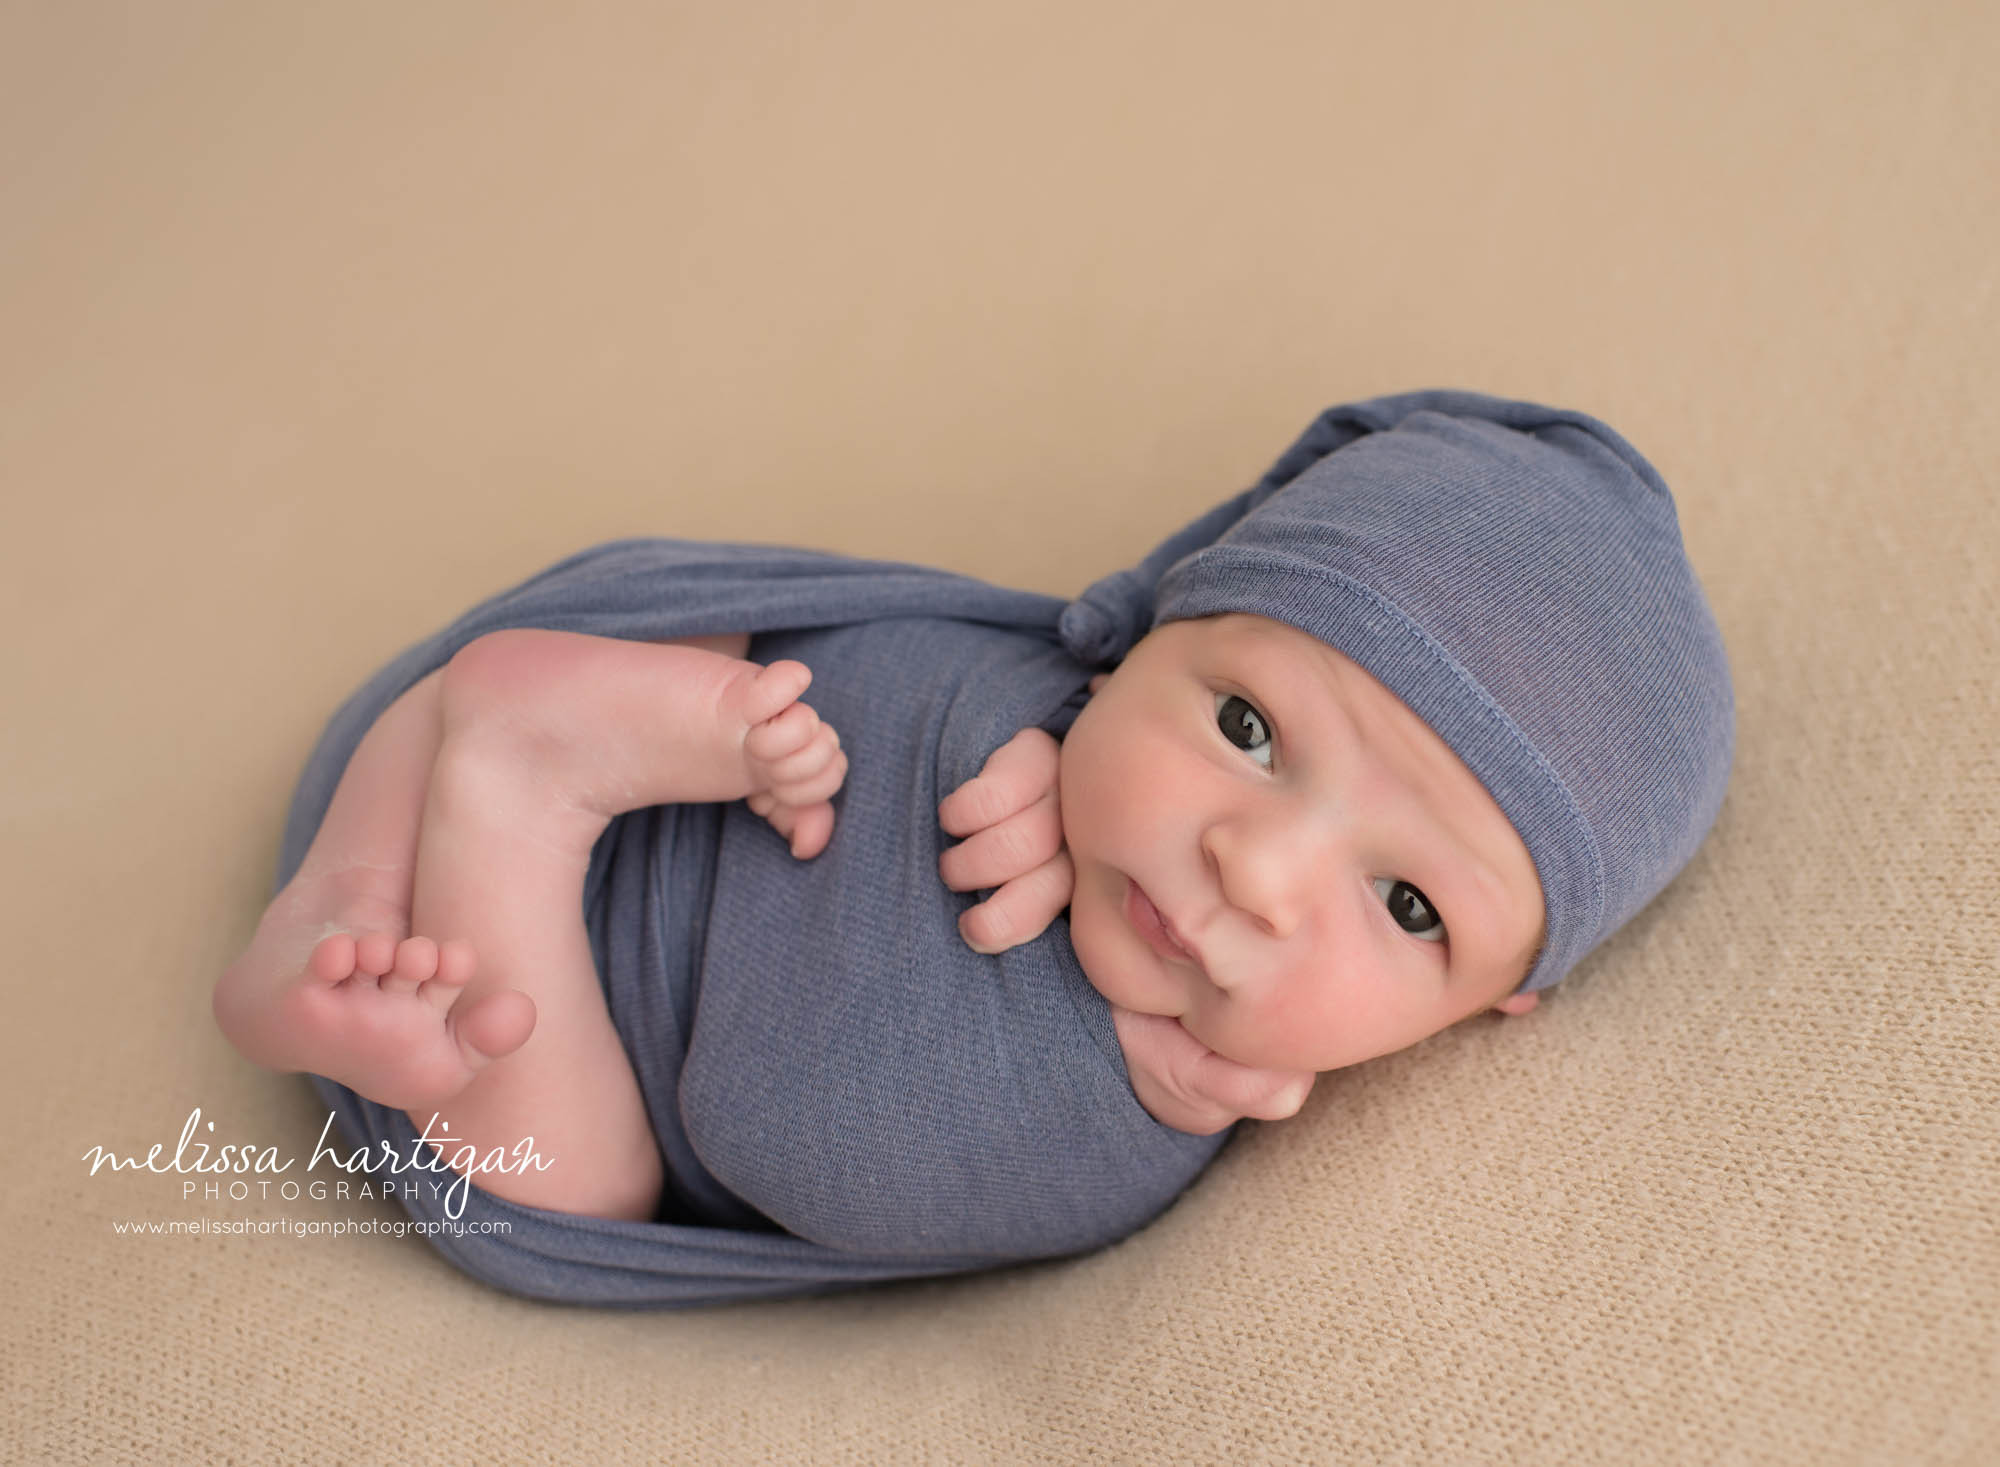 Melissa Hartigan Photography Newborn Photographer Connecticut baby boy wearing blue knit hat and matching wrap laying on tan blanket awake